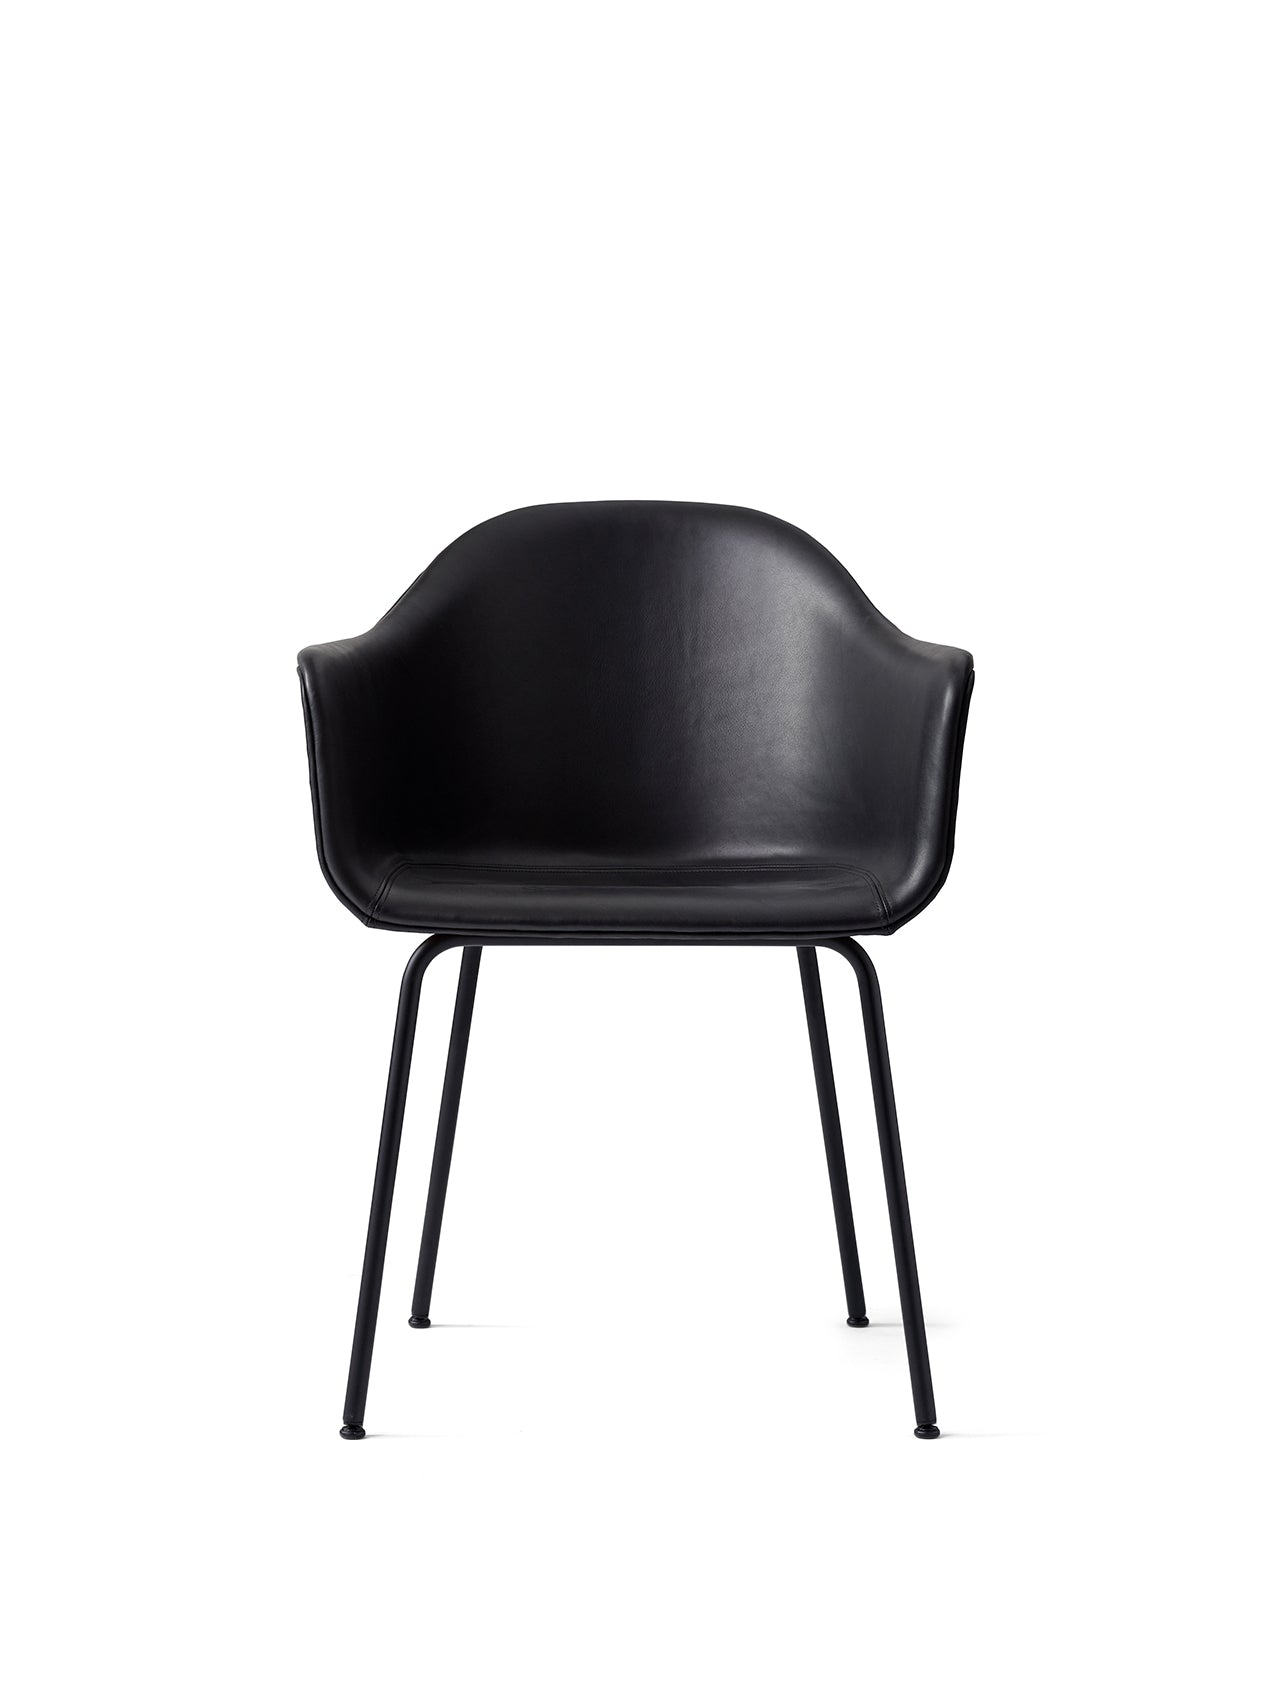 Harbour Dining Chair, Black Steel Base, Upholstered